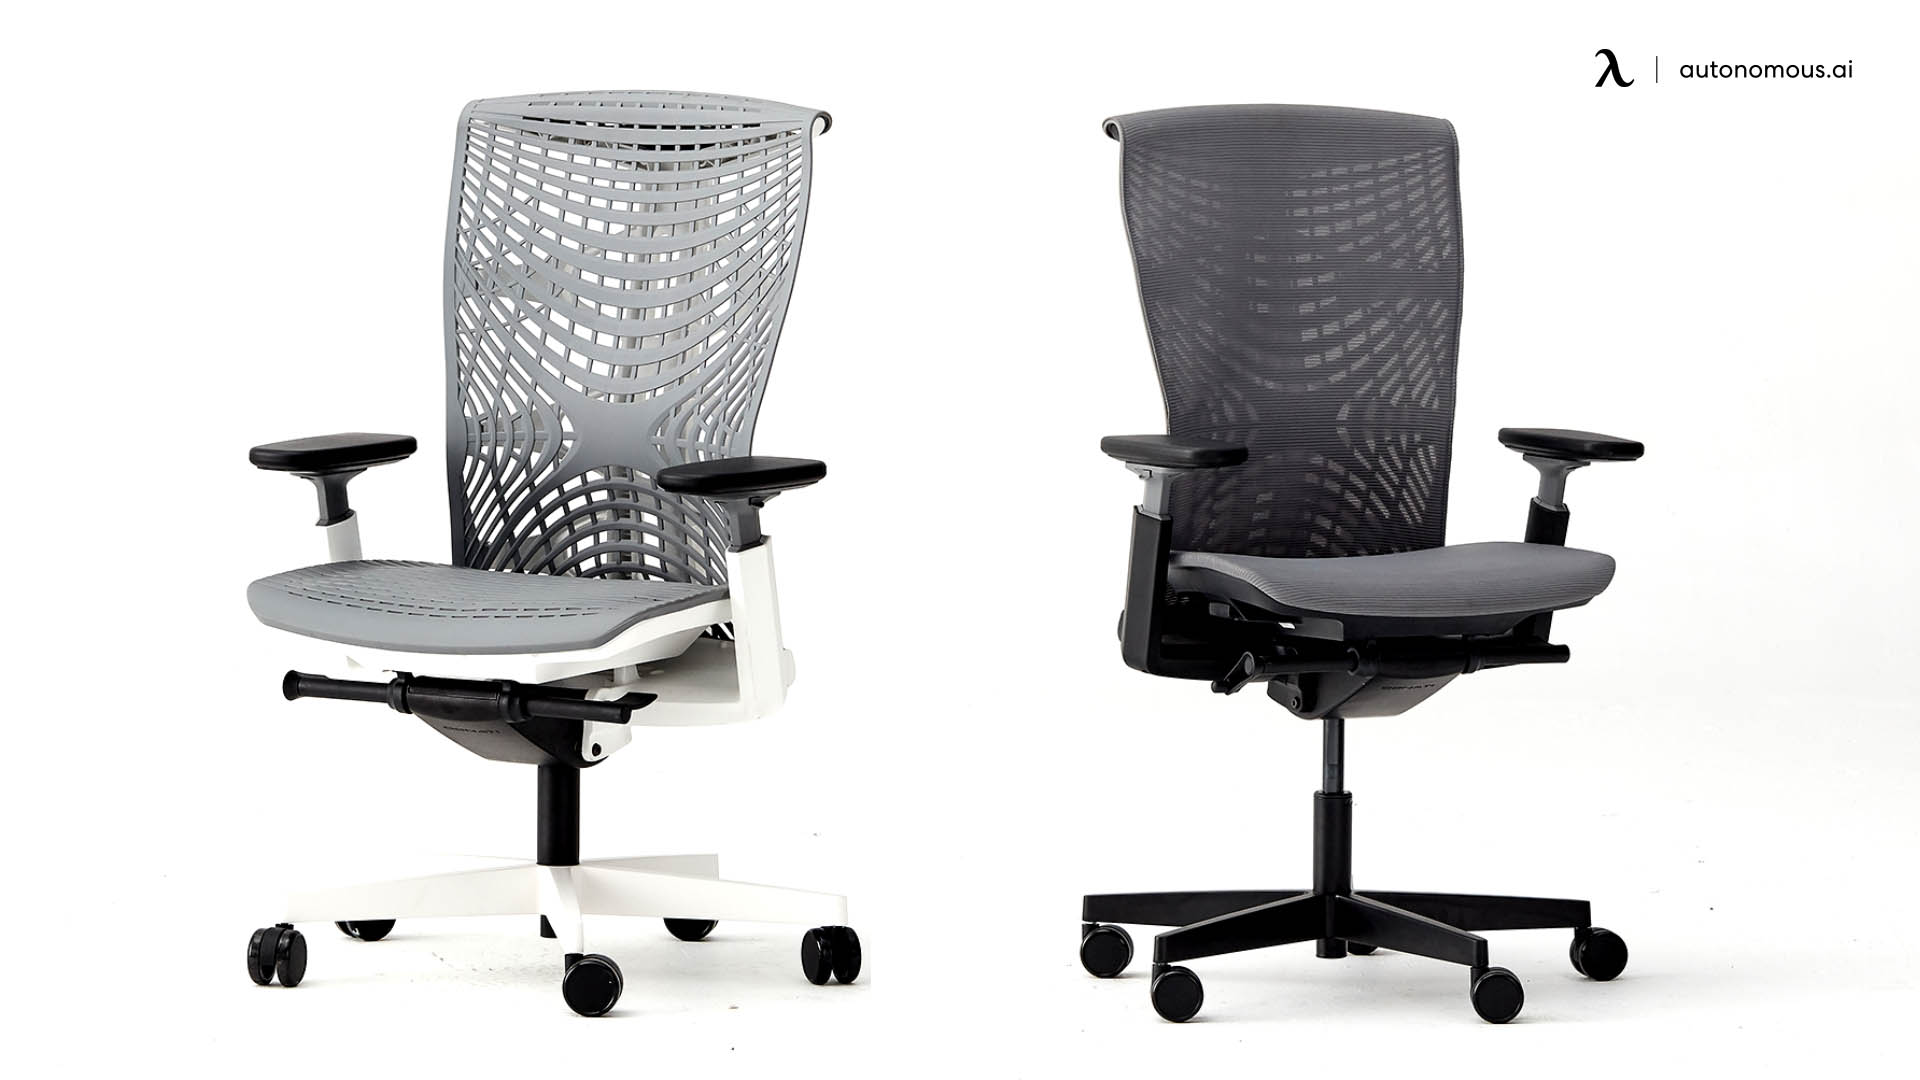 Kinn Chair - Ergonomic Chair under $500